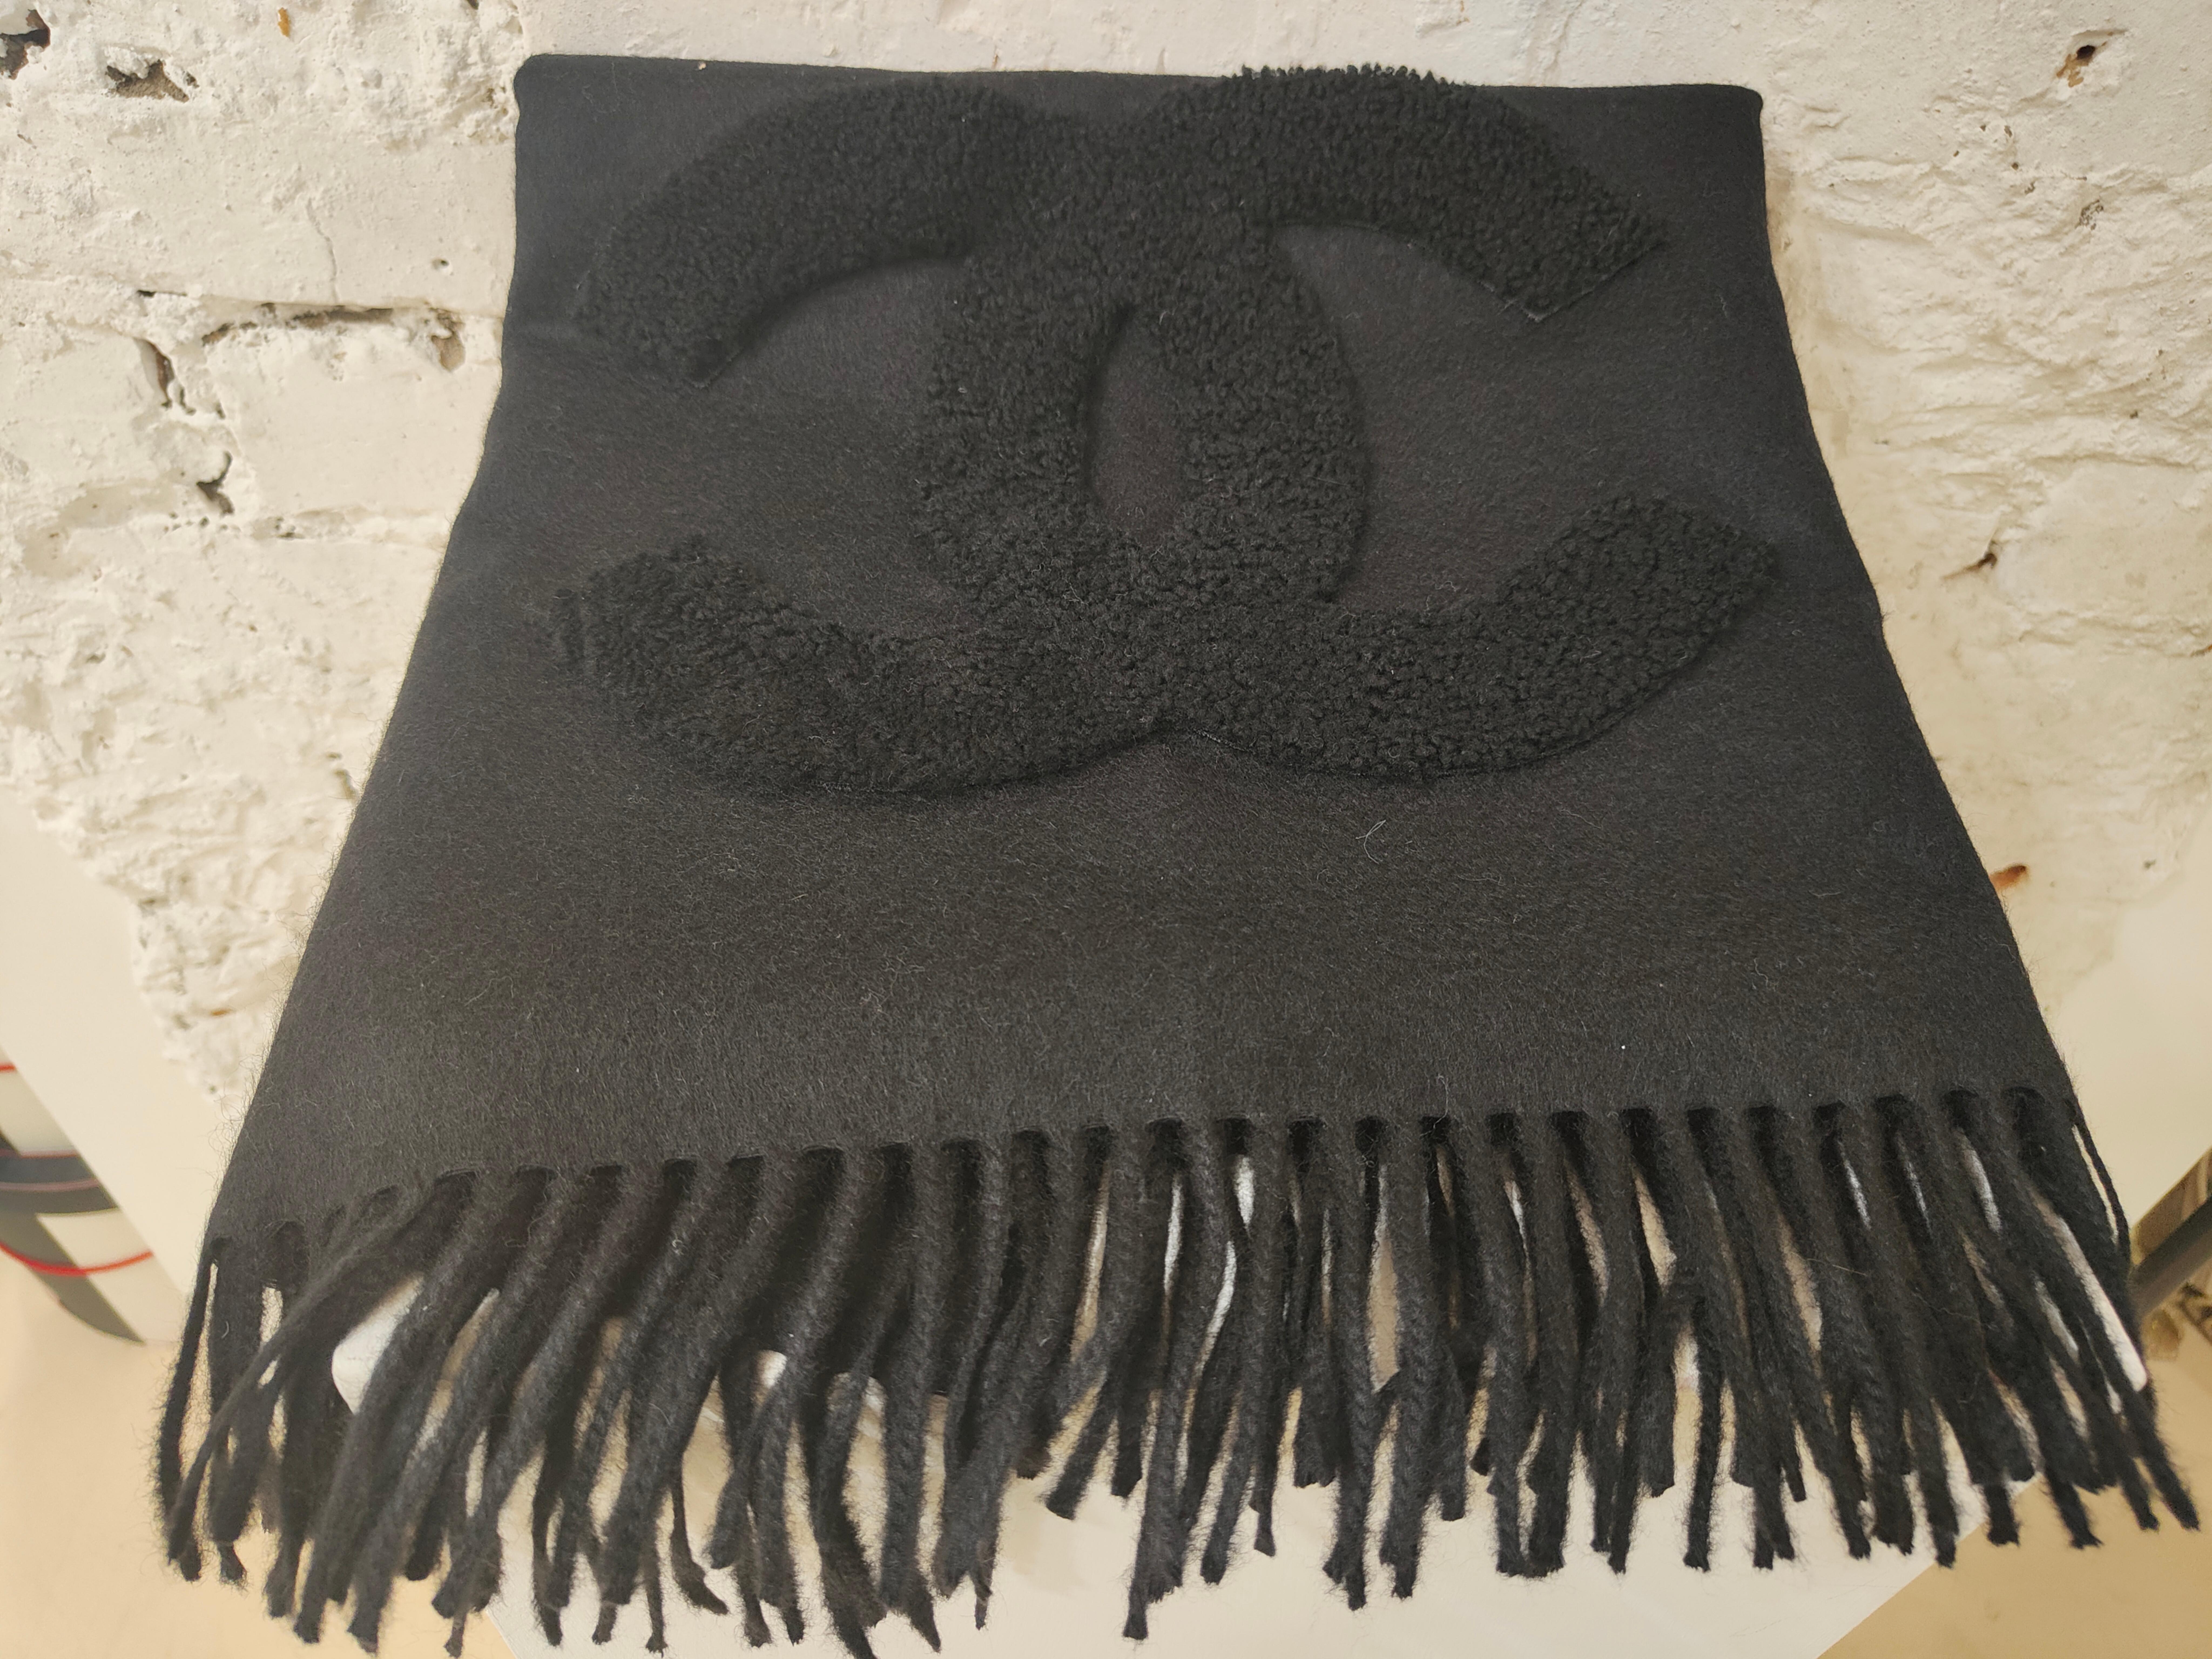 chanel cashmere scarf black white cc